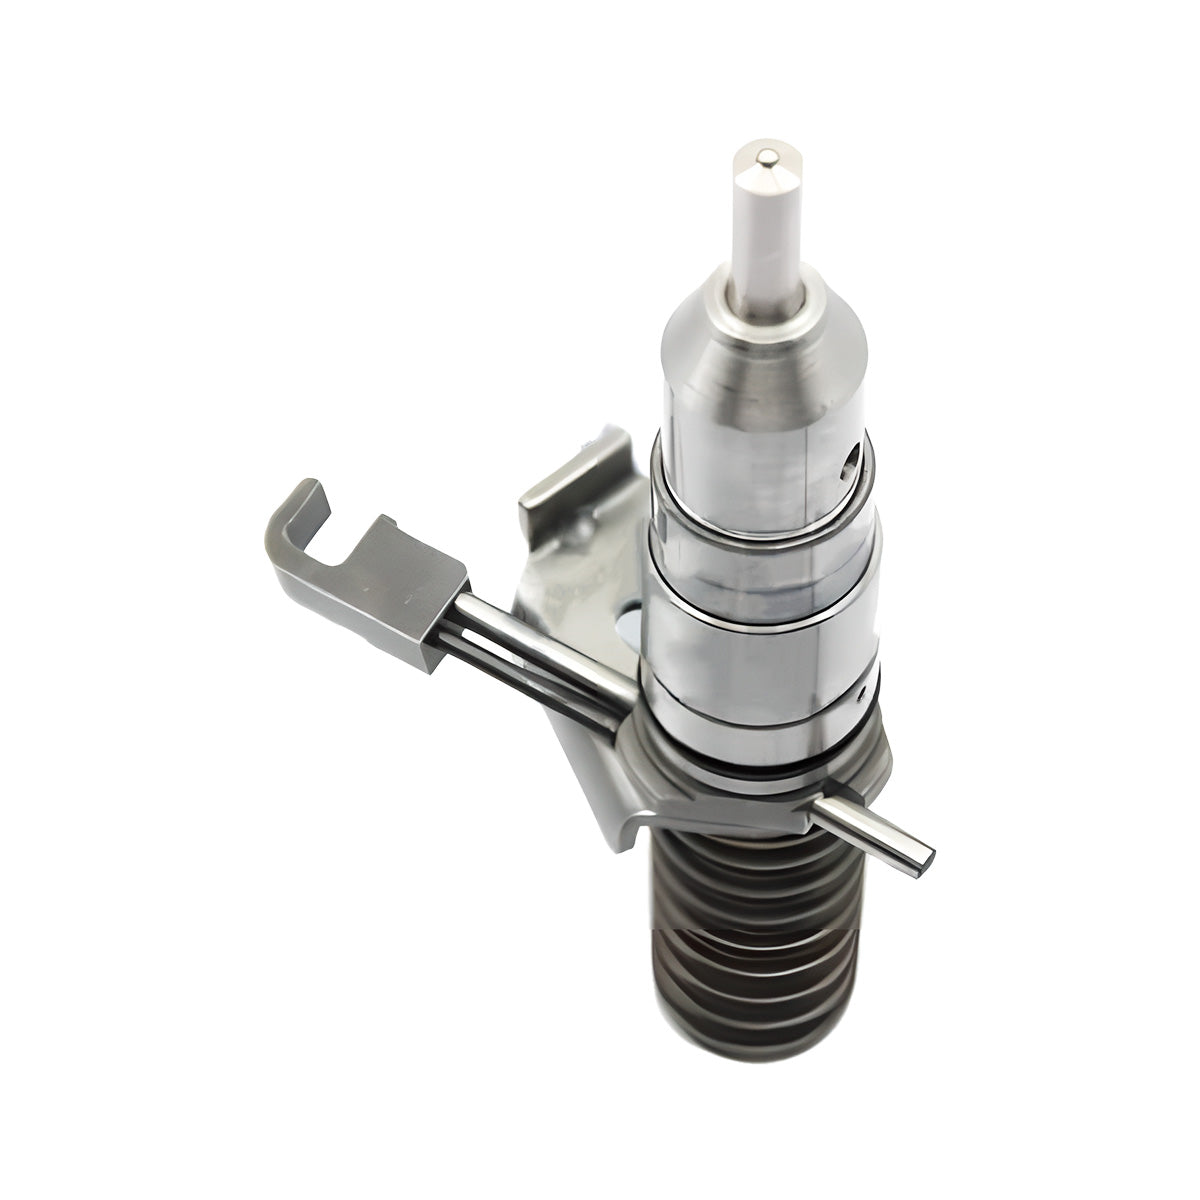 127-8218 127-8216 Fuel Injector for Caterpillar 3116 3114 Engine - Sinocmp